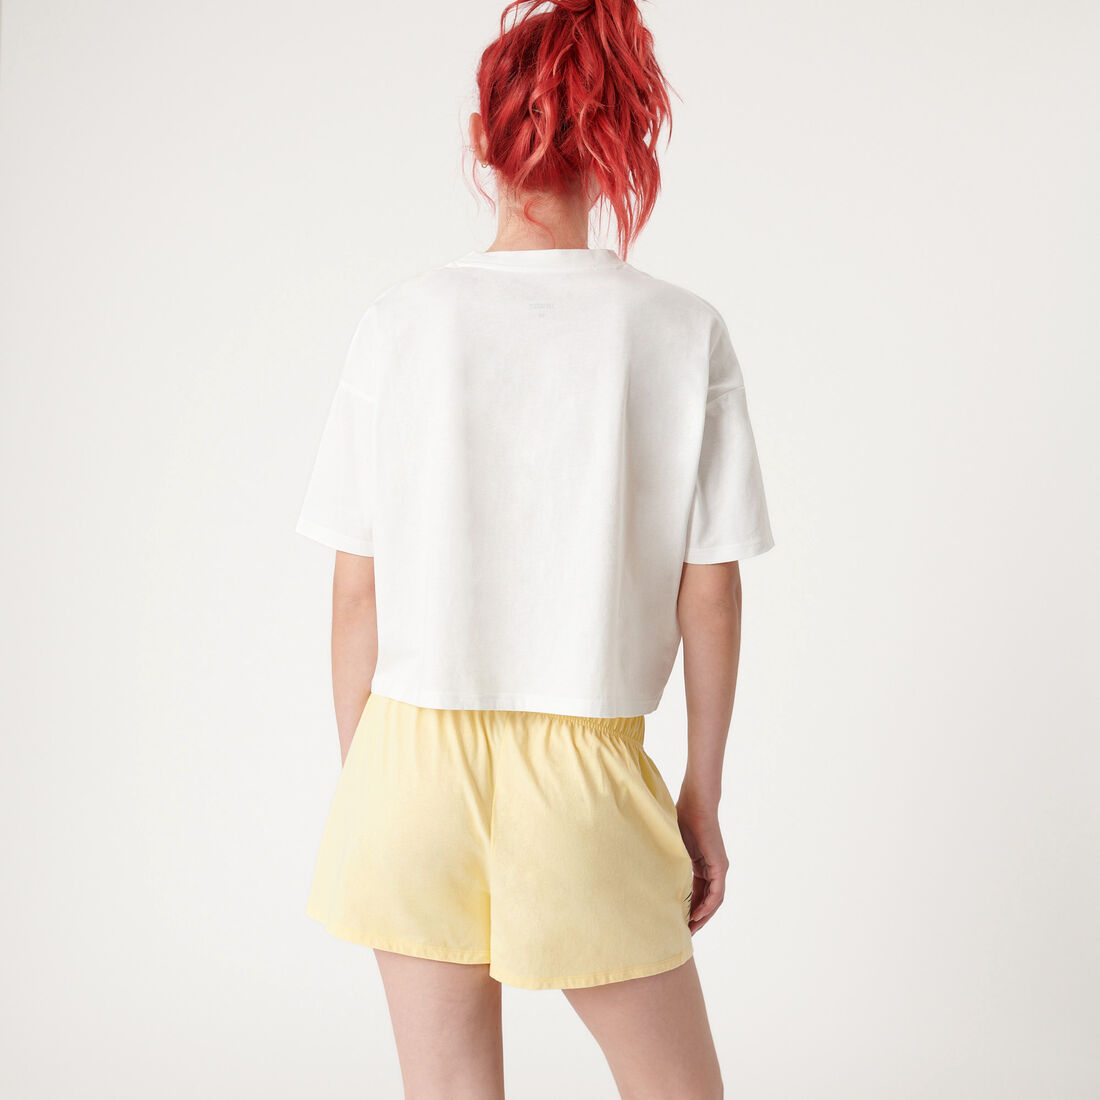 Shorts with Simba print;